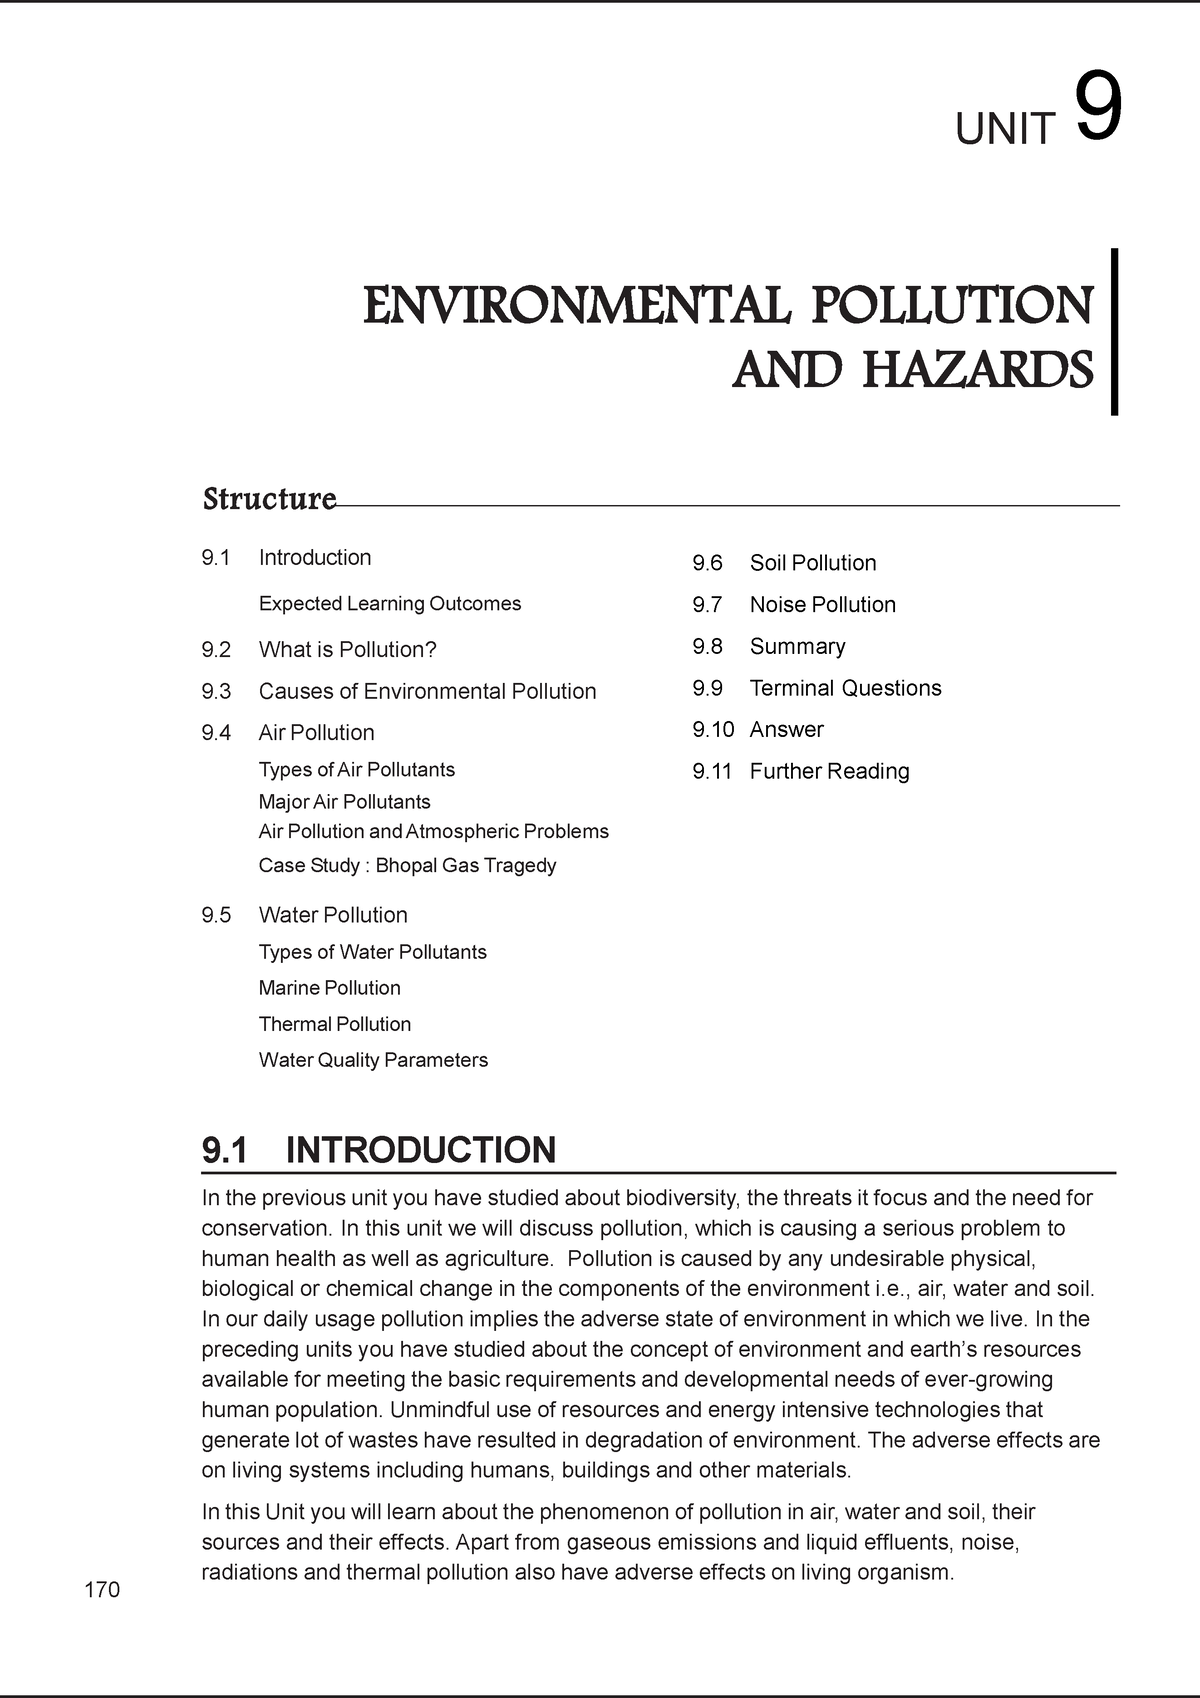 a term paper on environmental hazards